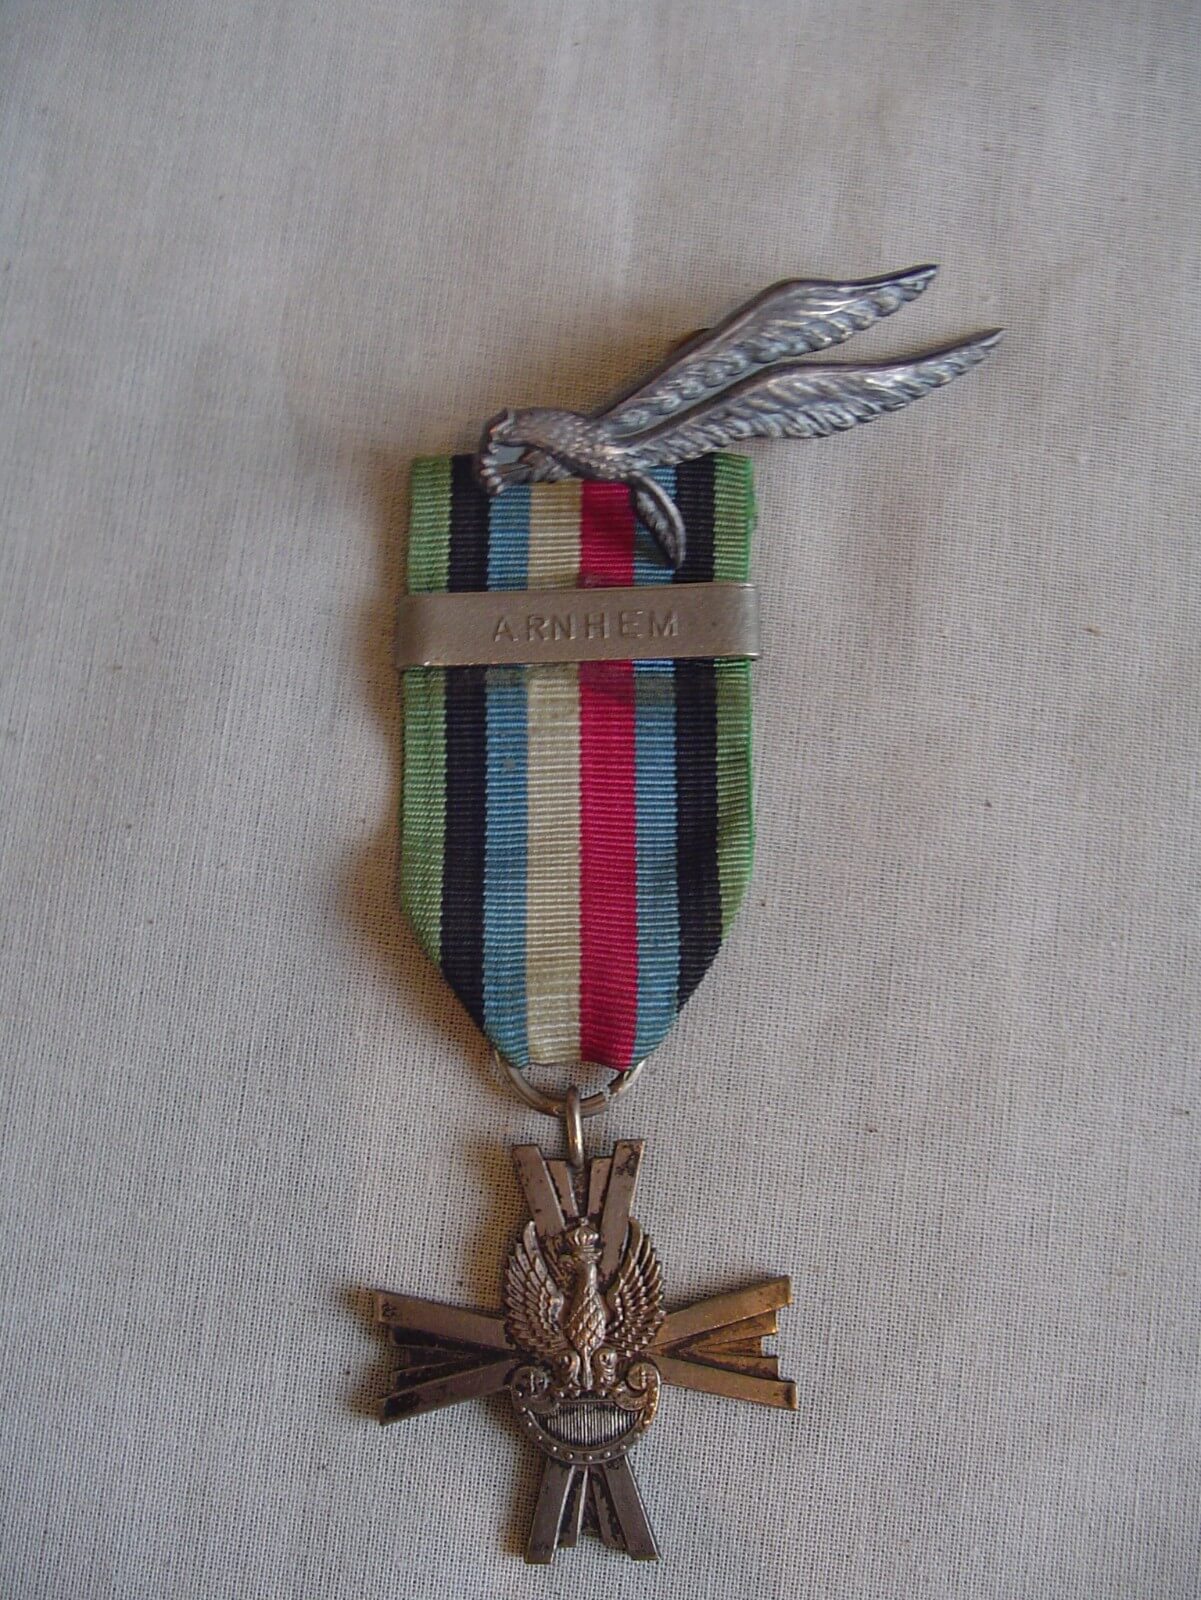 Arnhem 1944 Poolse Medaille en parachutisten embleem de tweede wereldoorlog